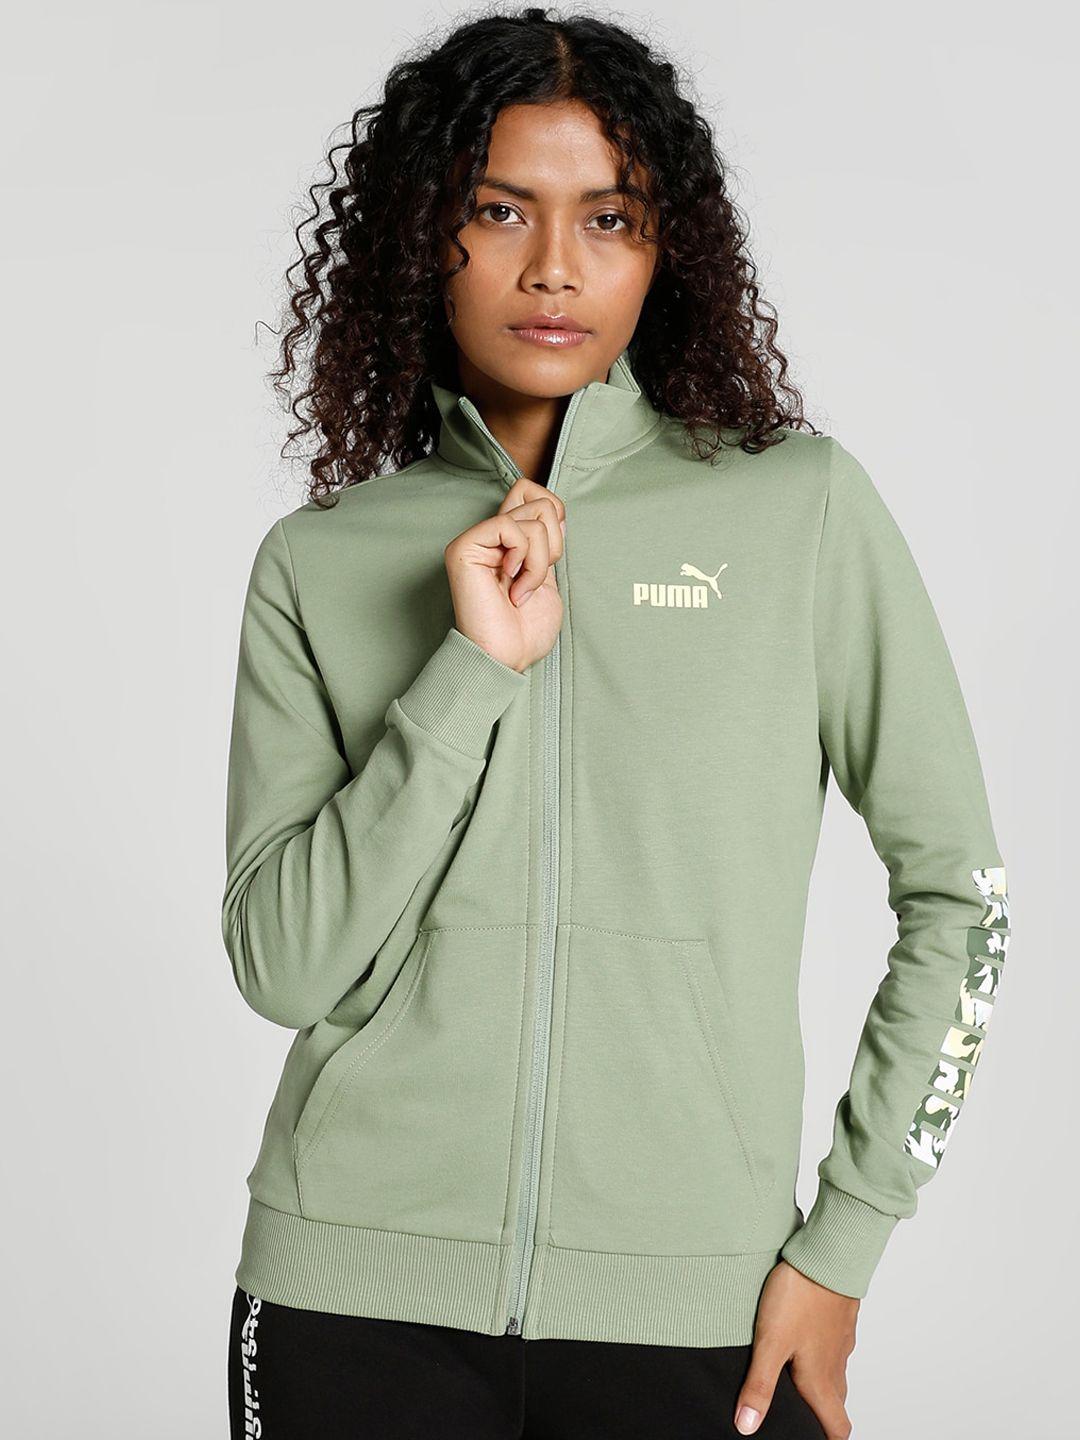 puma-flower-logo-knitted-sporty-jacket